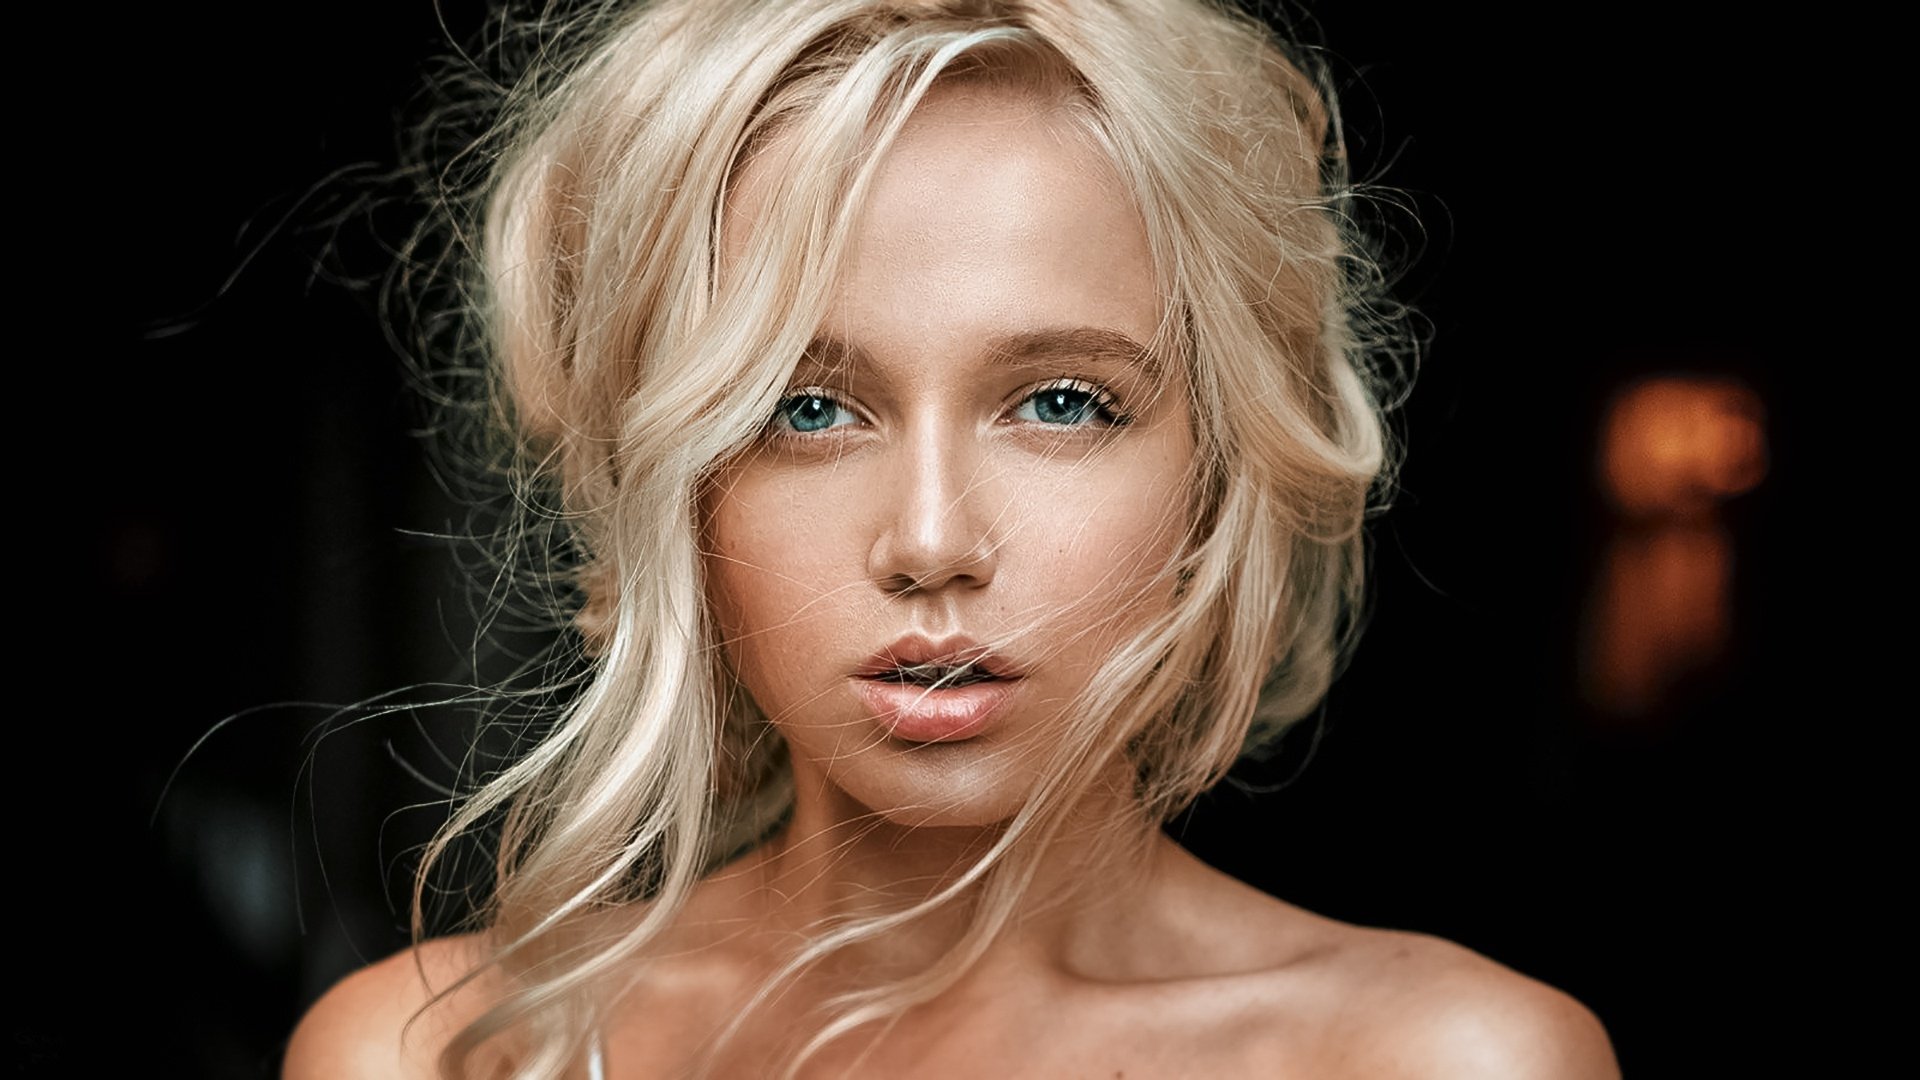 Download Blue Eyes Blonde Model Woman Face Hd Wallpaper By Georgy Chernyadyev